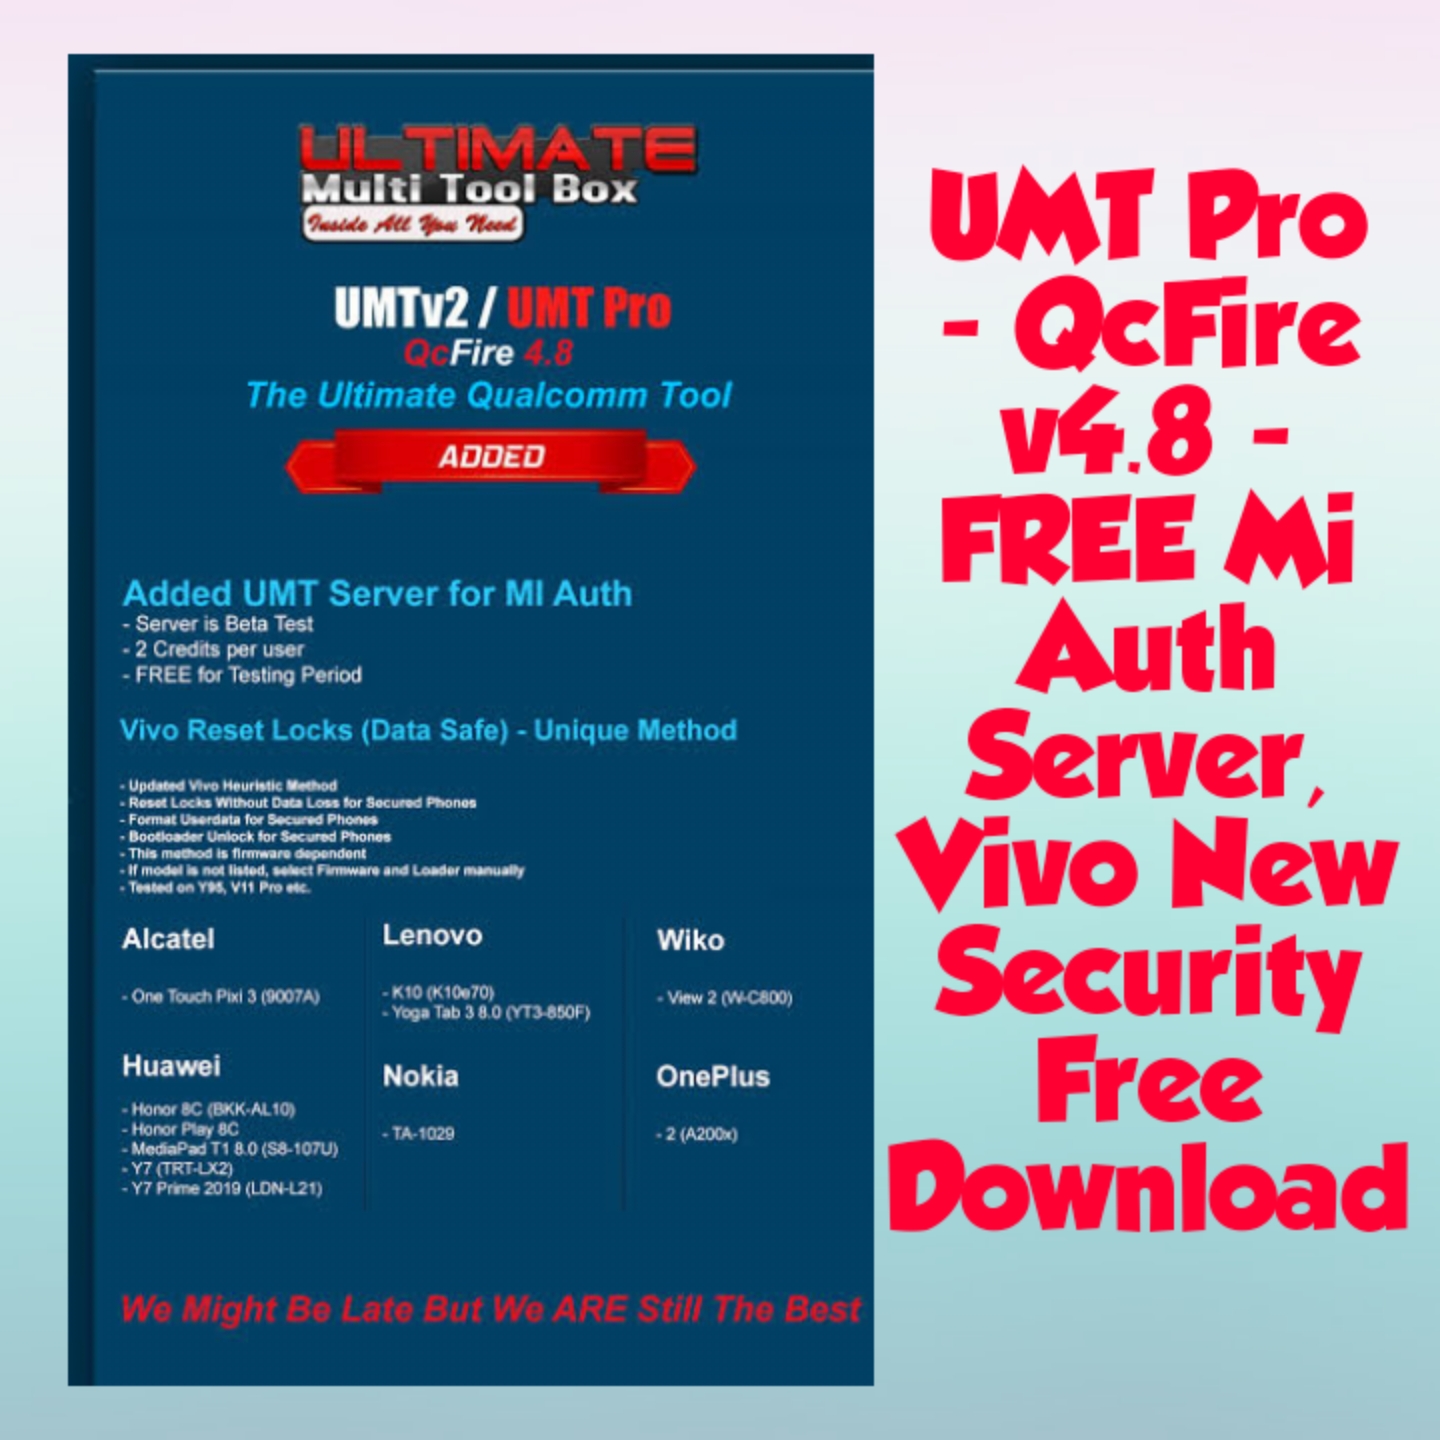 UMT Pro - QcFire v4.8 - FREE Mi Auth Server, Vivo New Security Free Download